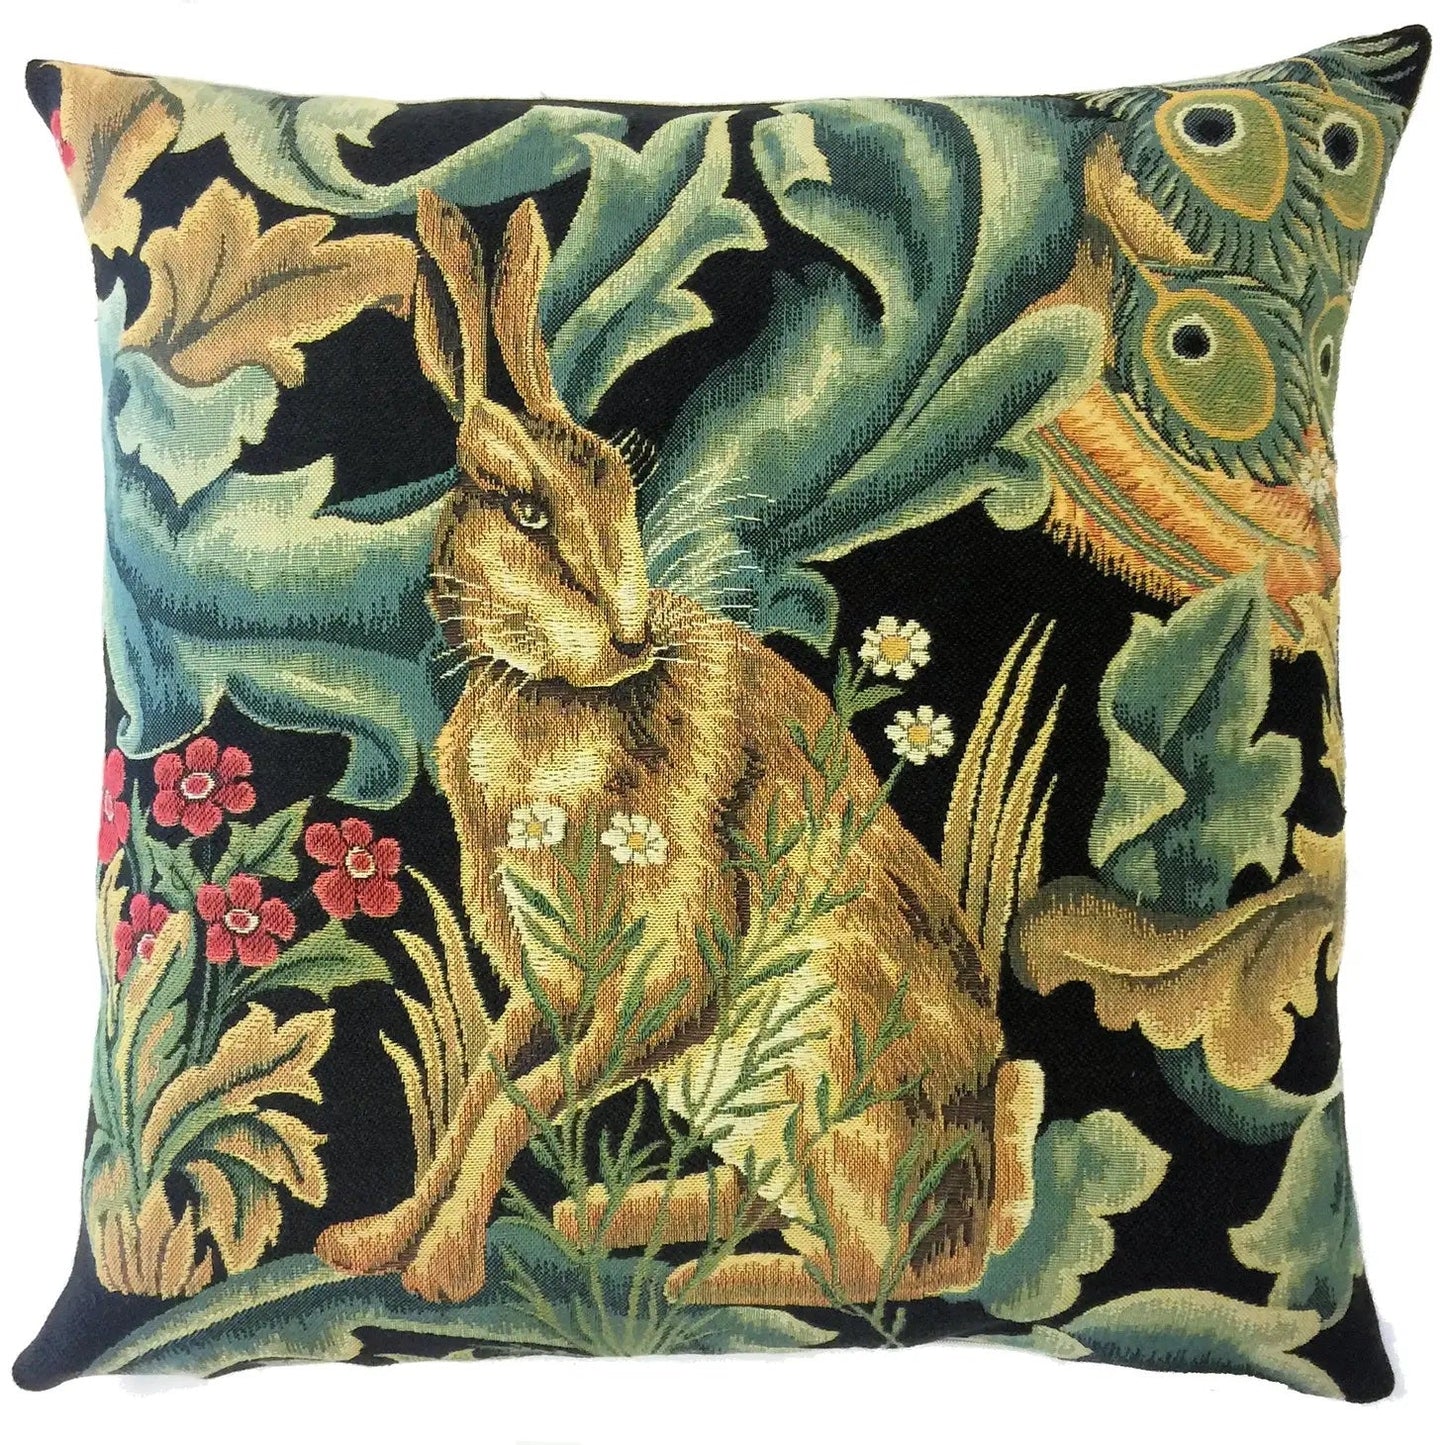 Pillow: William Morris Decorative Hare Pillow Cover